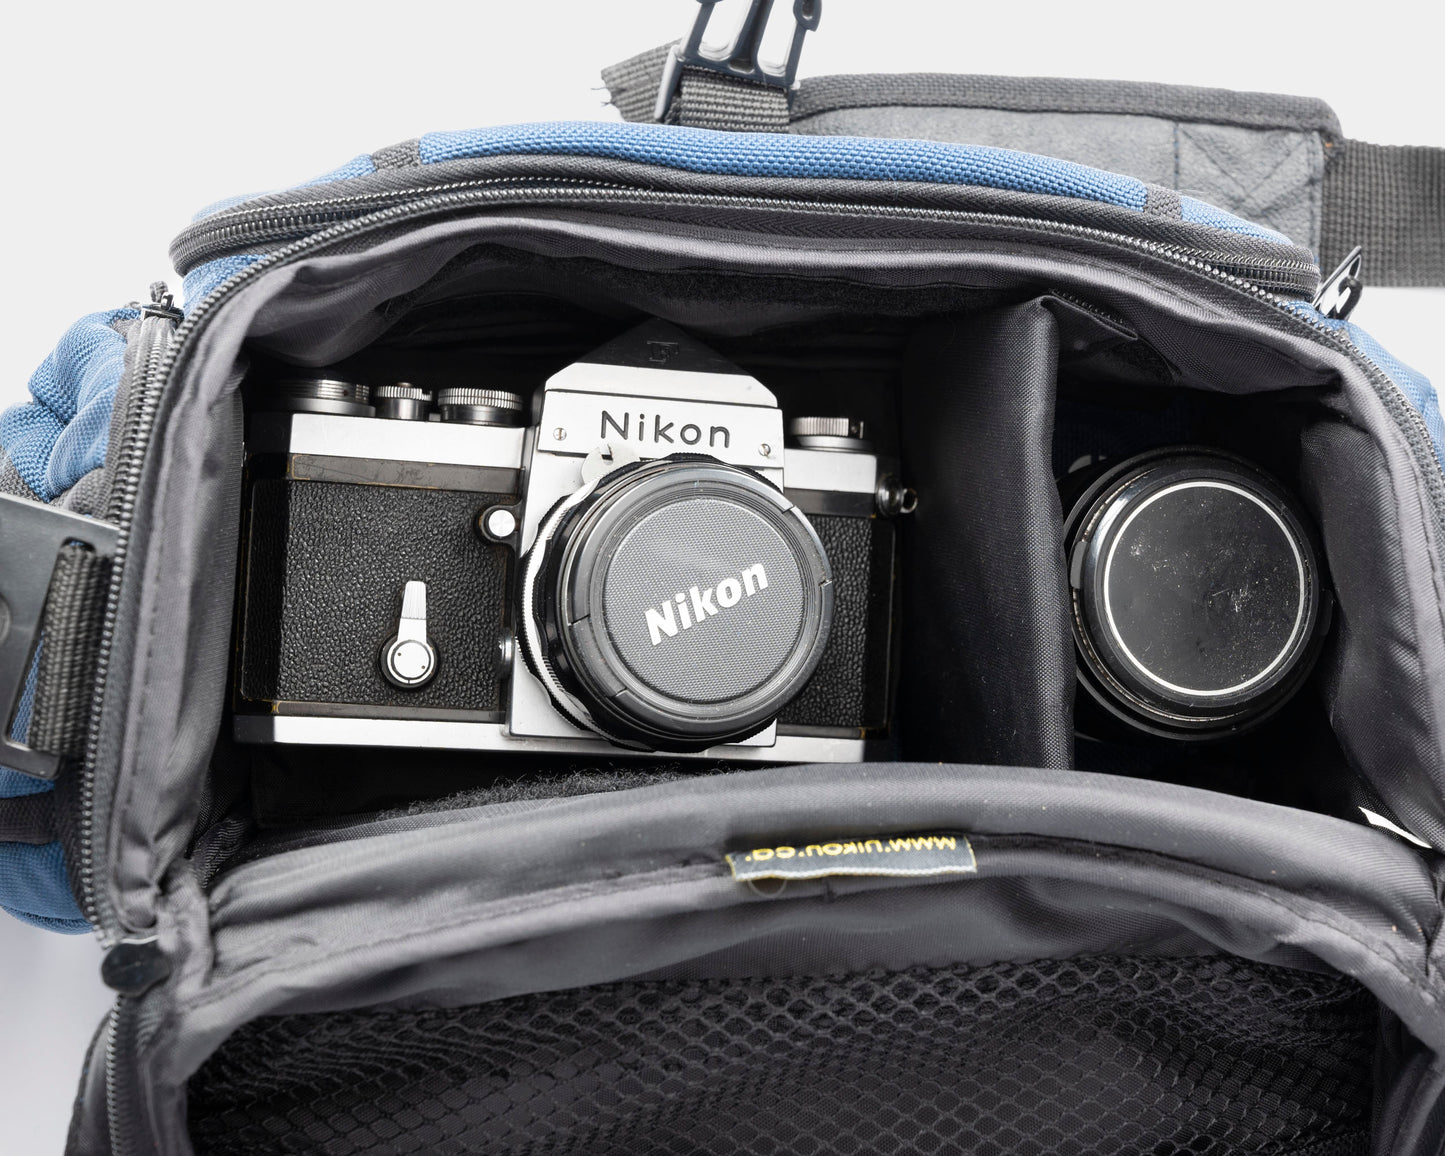 Nikon mid-sized blue and black camera bag